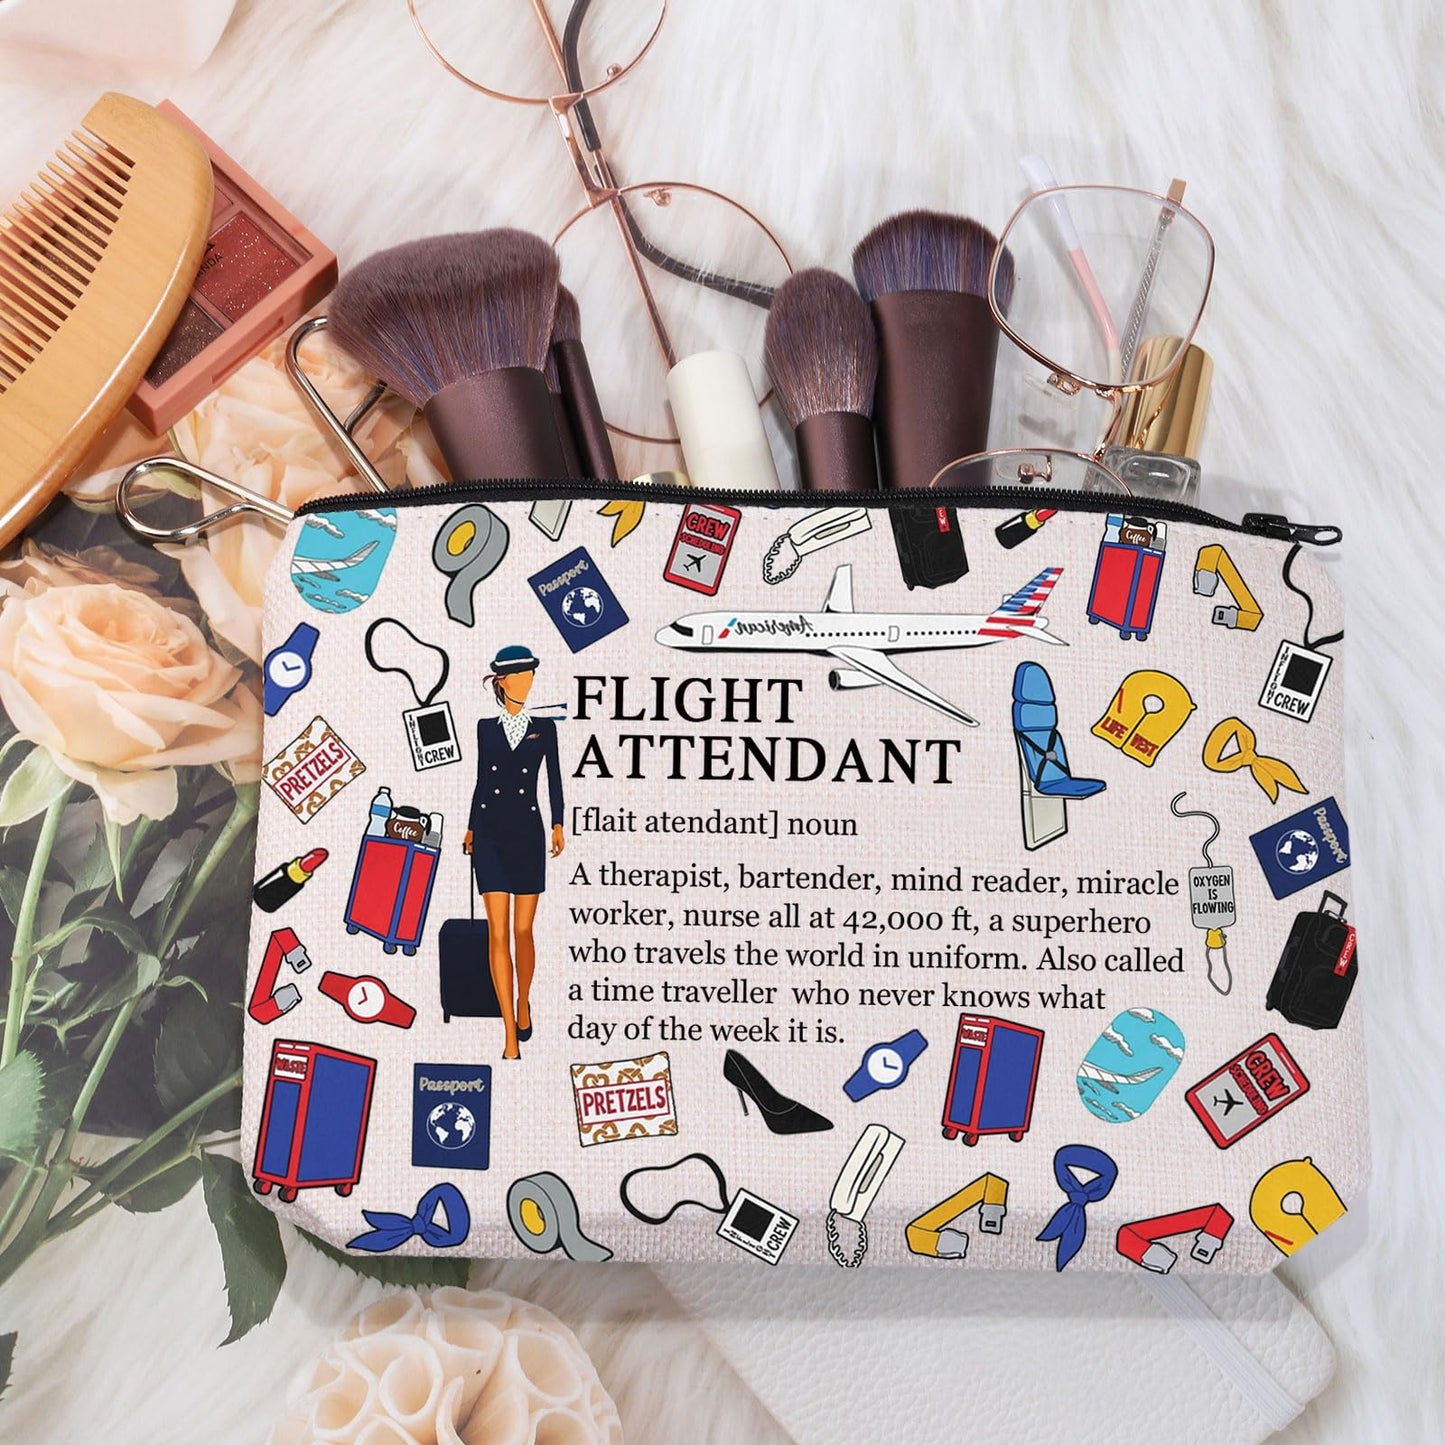 MEIKIUP Flight Attendant Gifts Air Stewardess Cosmetic Travel Bag Stewardess Aviation Makeup Pouch Flight Student Graduation Gift (Flight Attendant noun Bag)